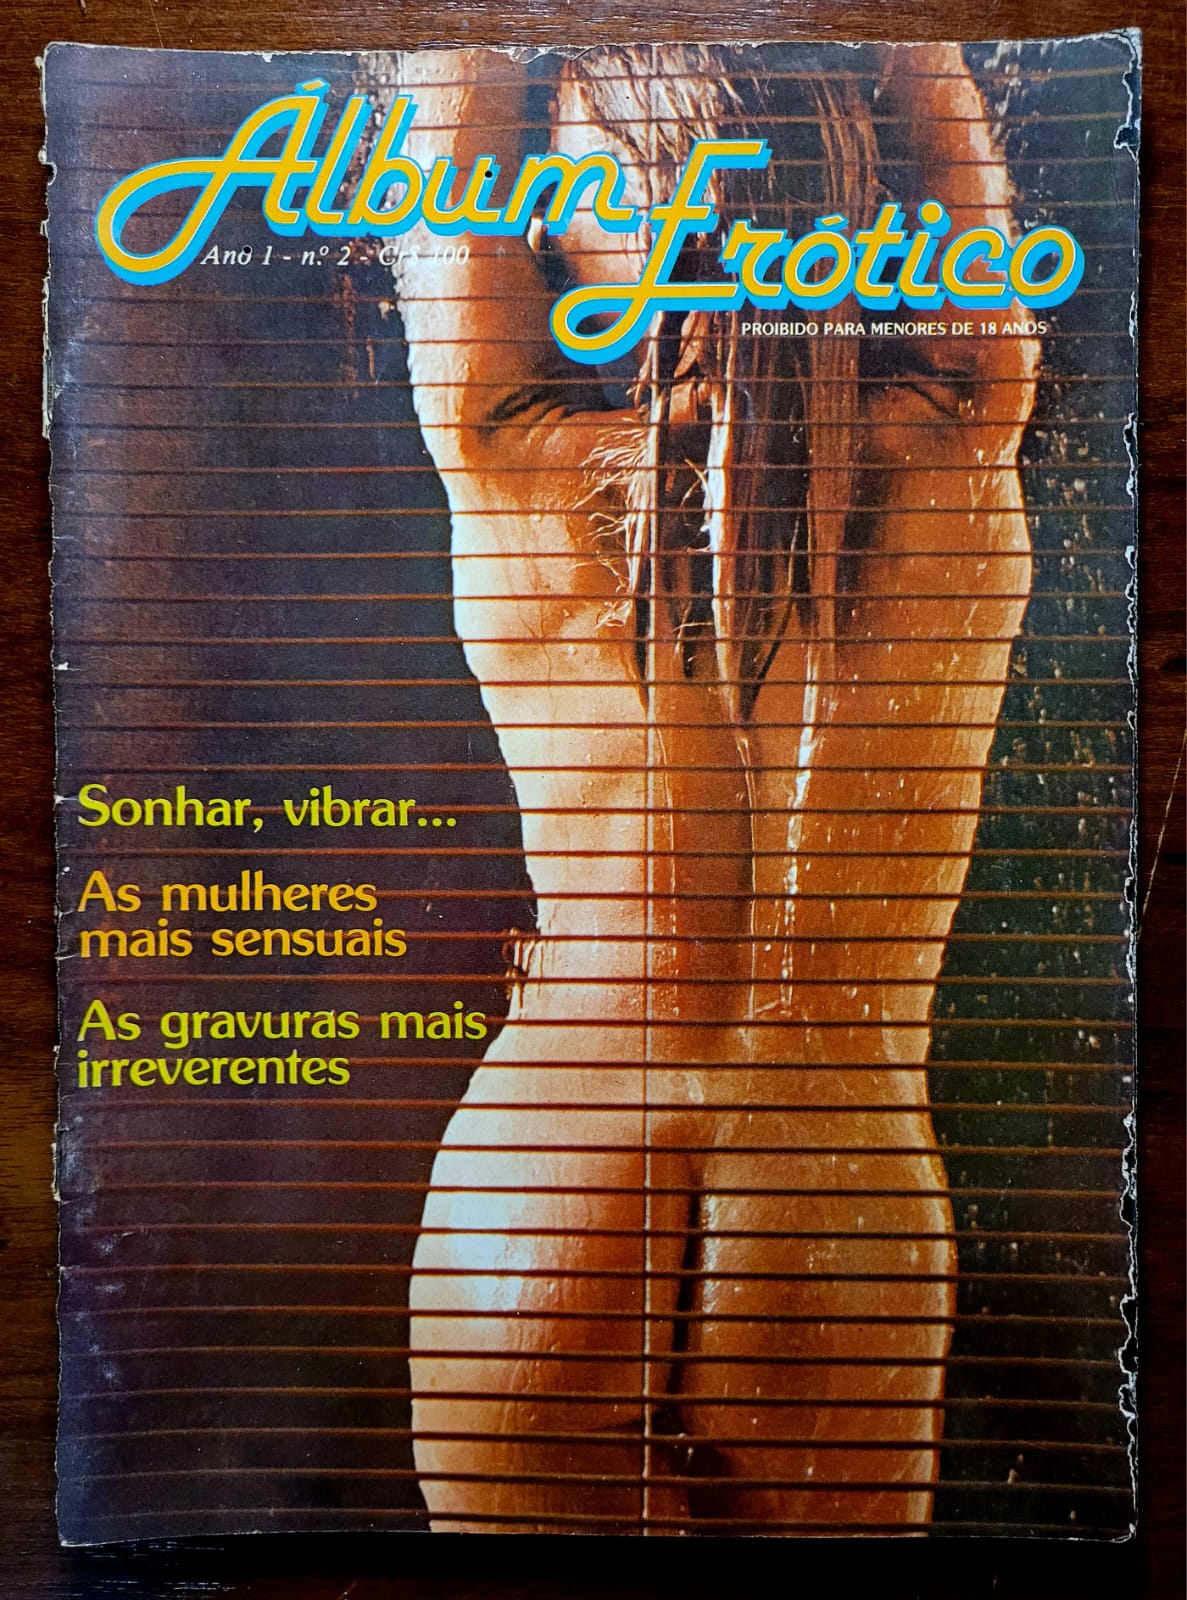 Album Erotico 2 Casa do Colecionador